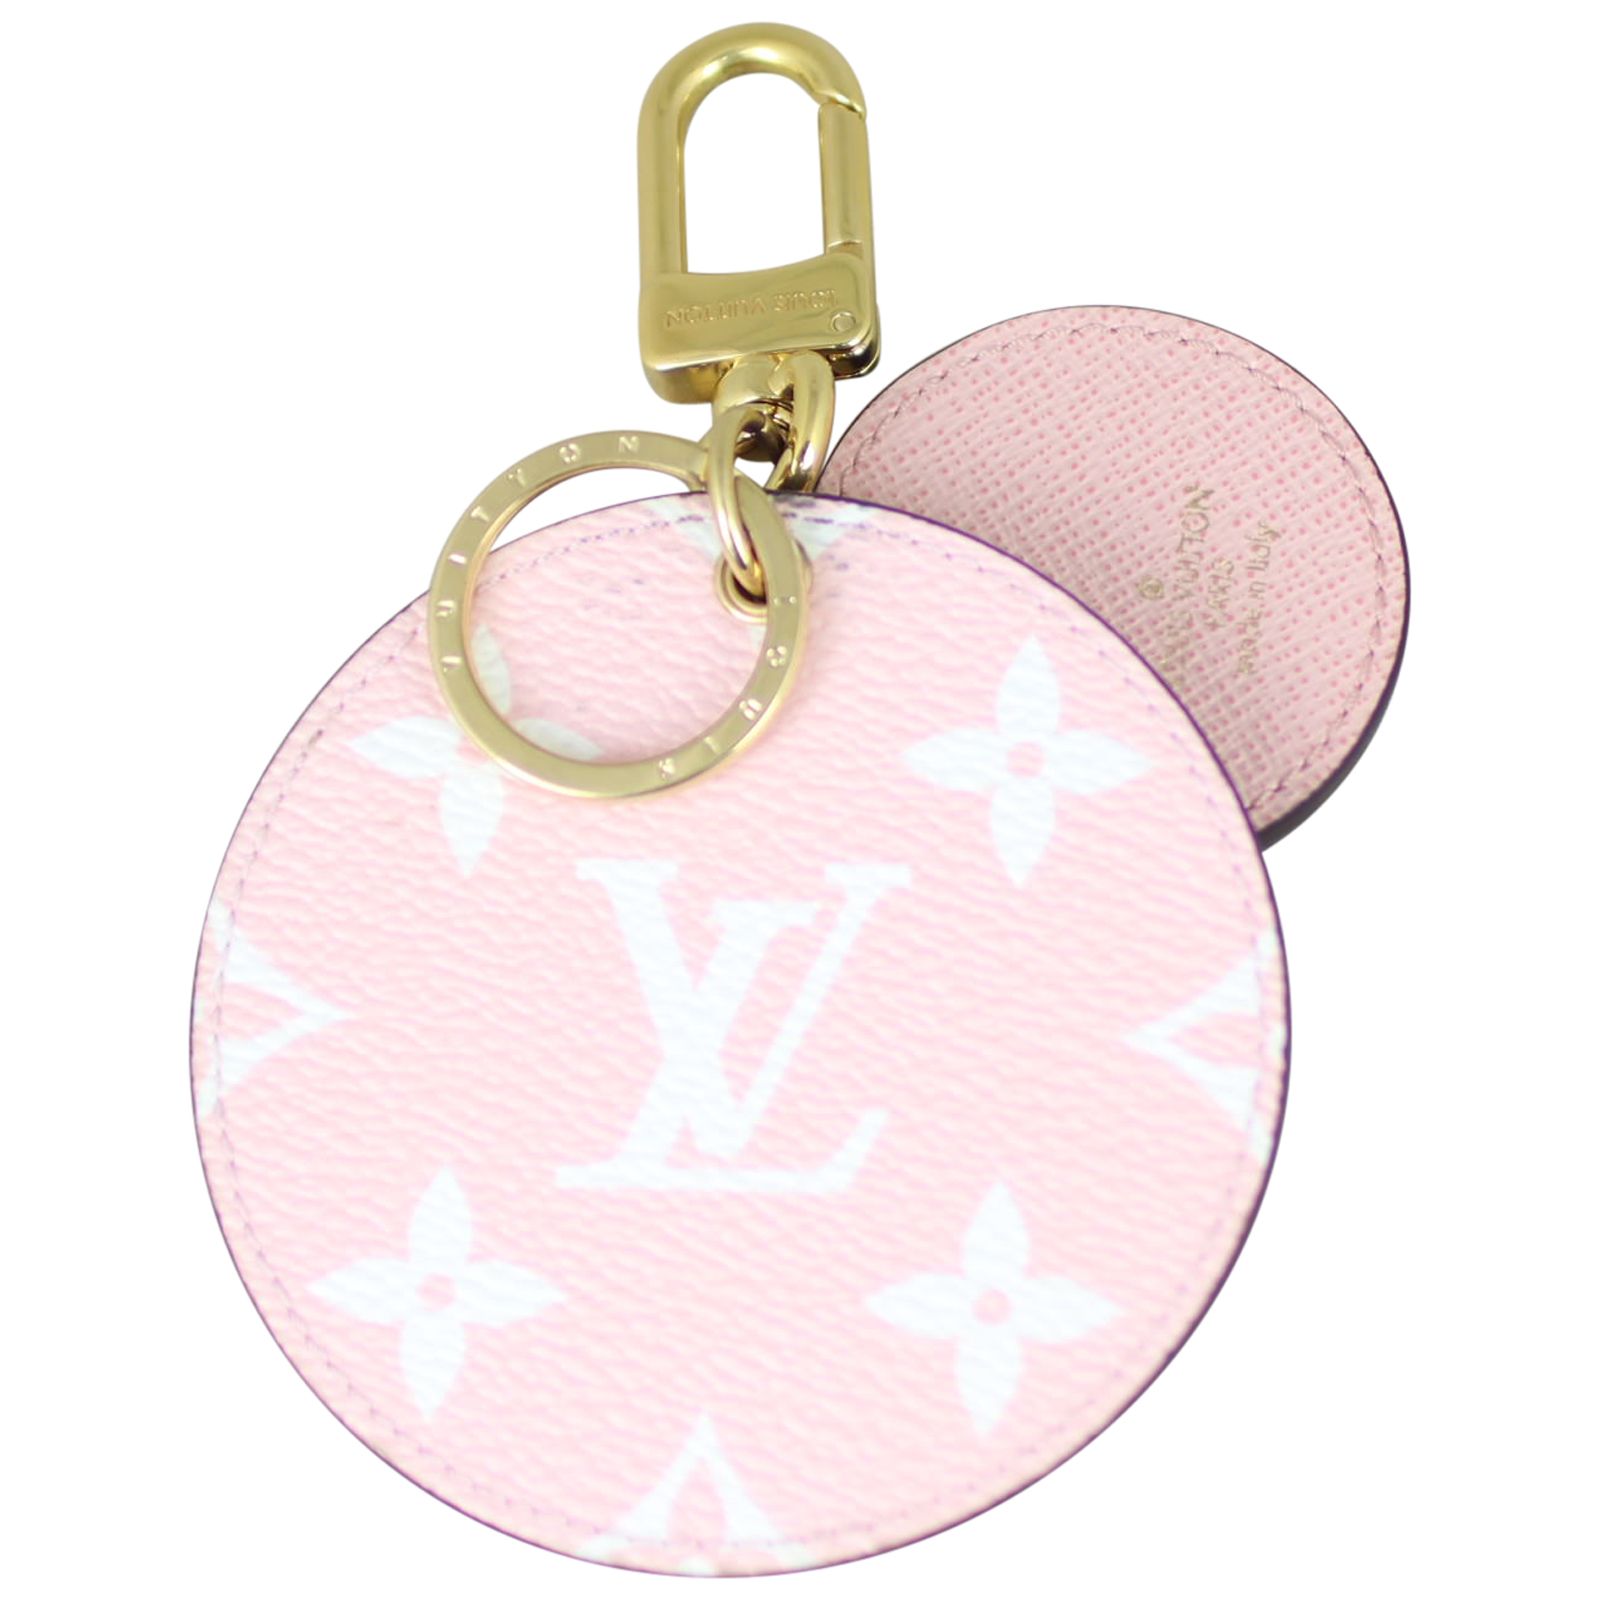 LOUIS VUITTON Monogram LV Compact Mirror Bag Charm Keychain Round